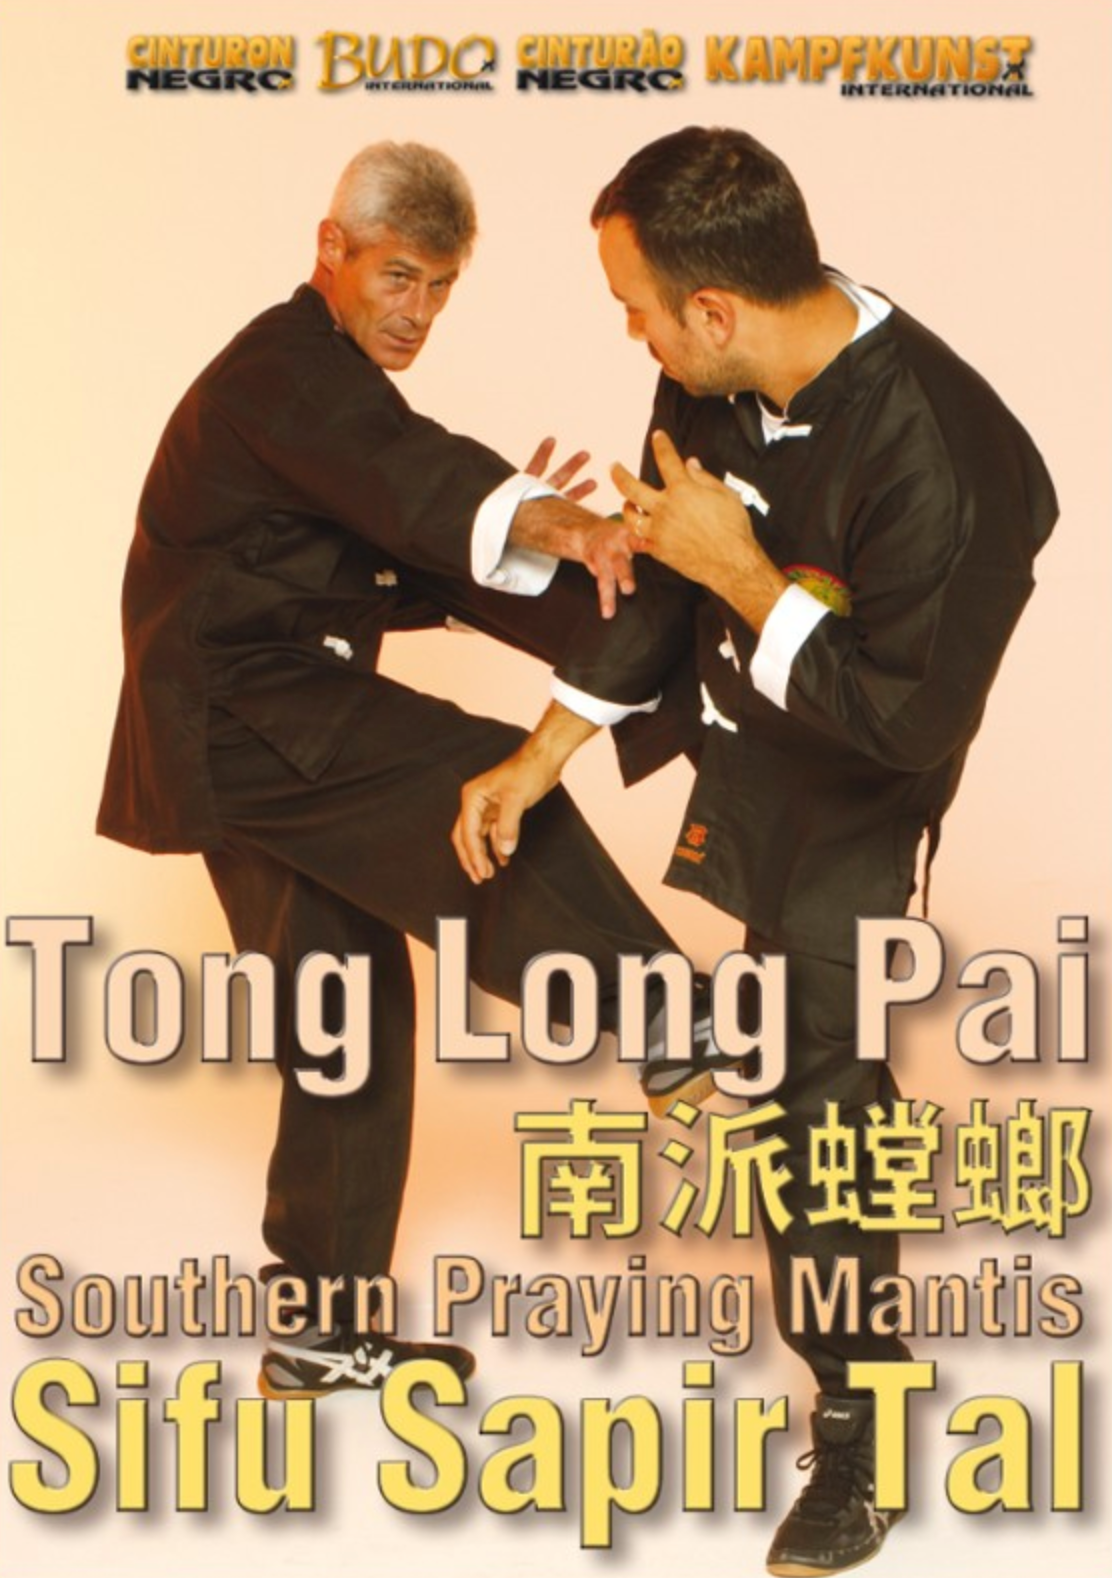 Tong Long Pai Southern Praying Mantis DVD by Sapir Tai - Budovideos Inc